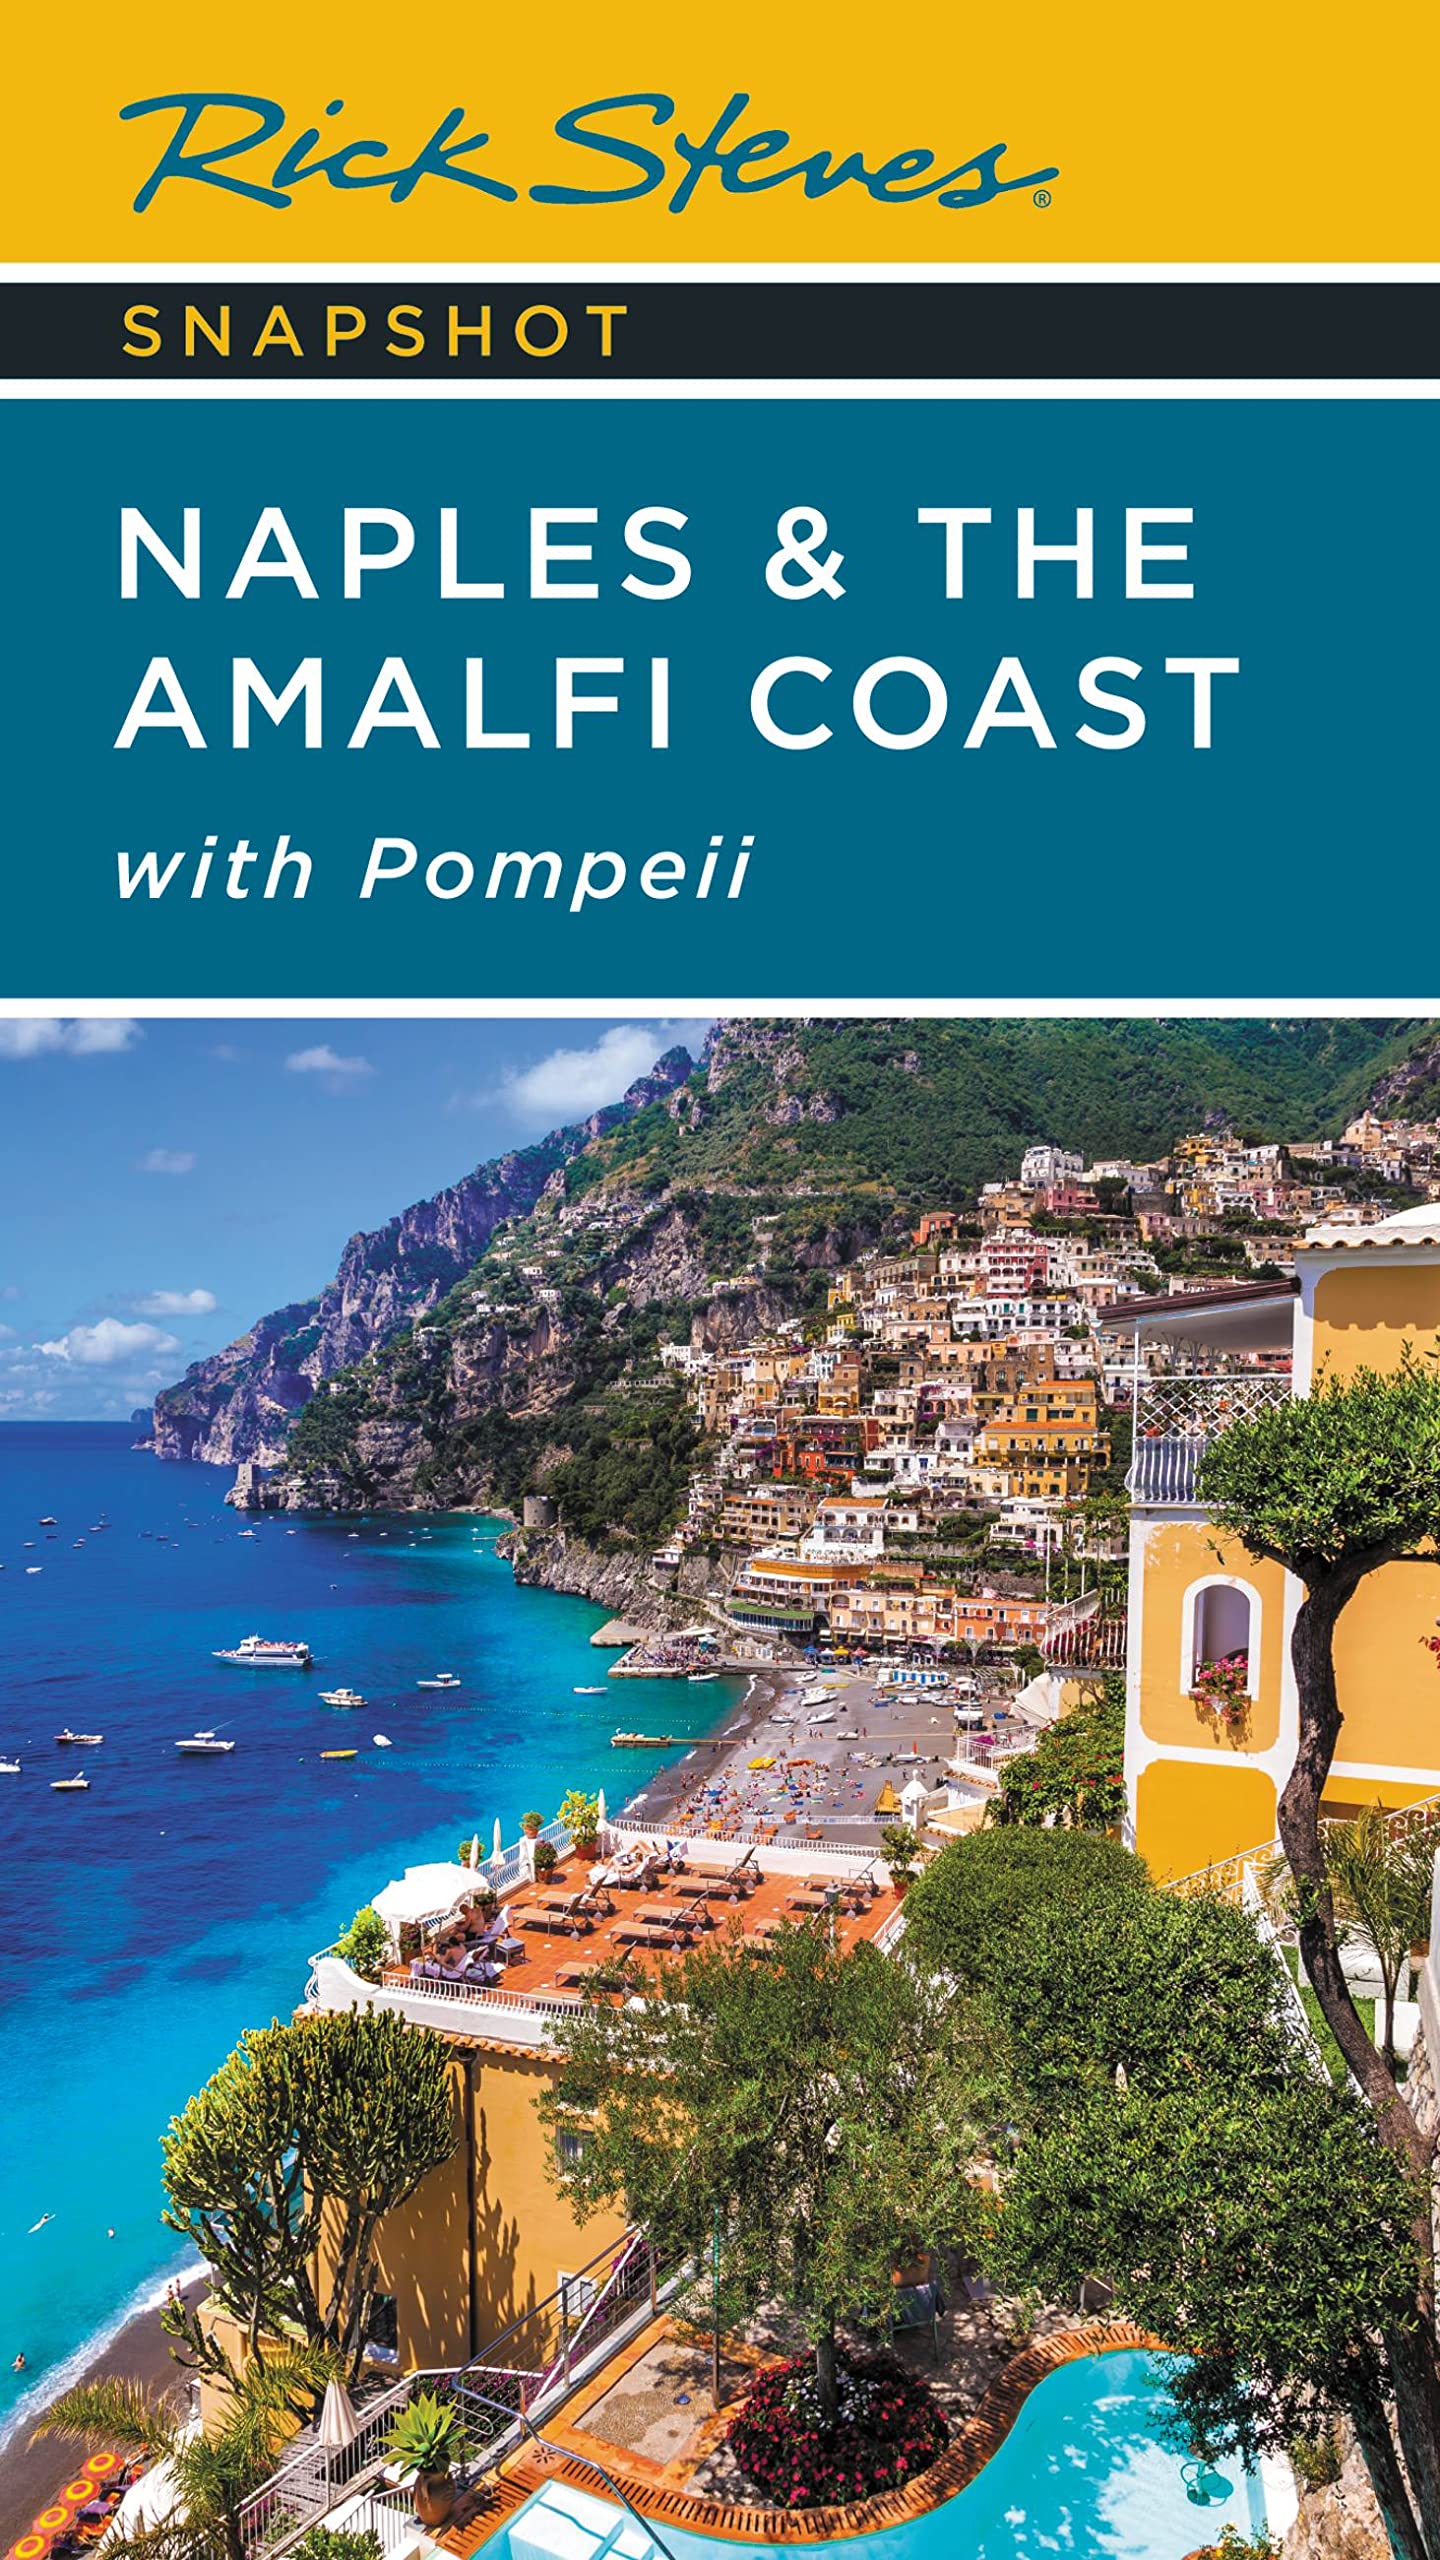 Rick Steves Snapshot Naples & the Amalfi Coast: With Pompeii by Steves, Rick